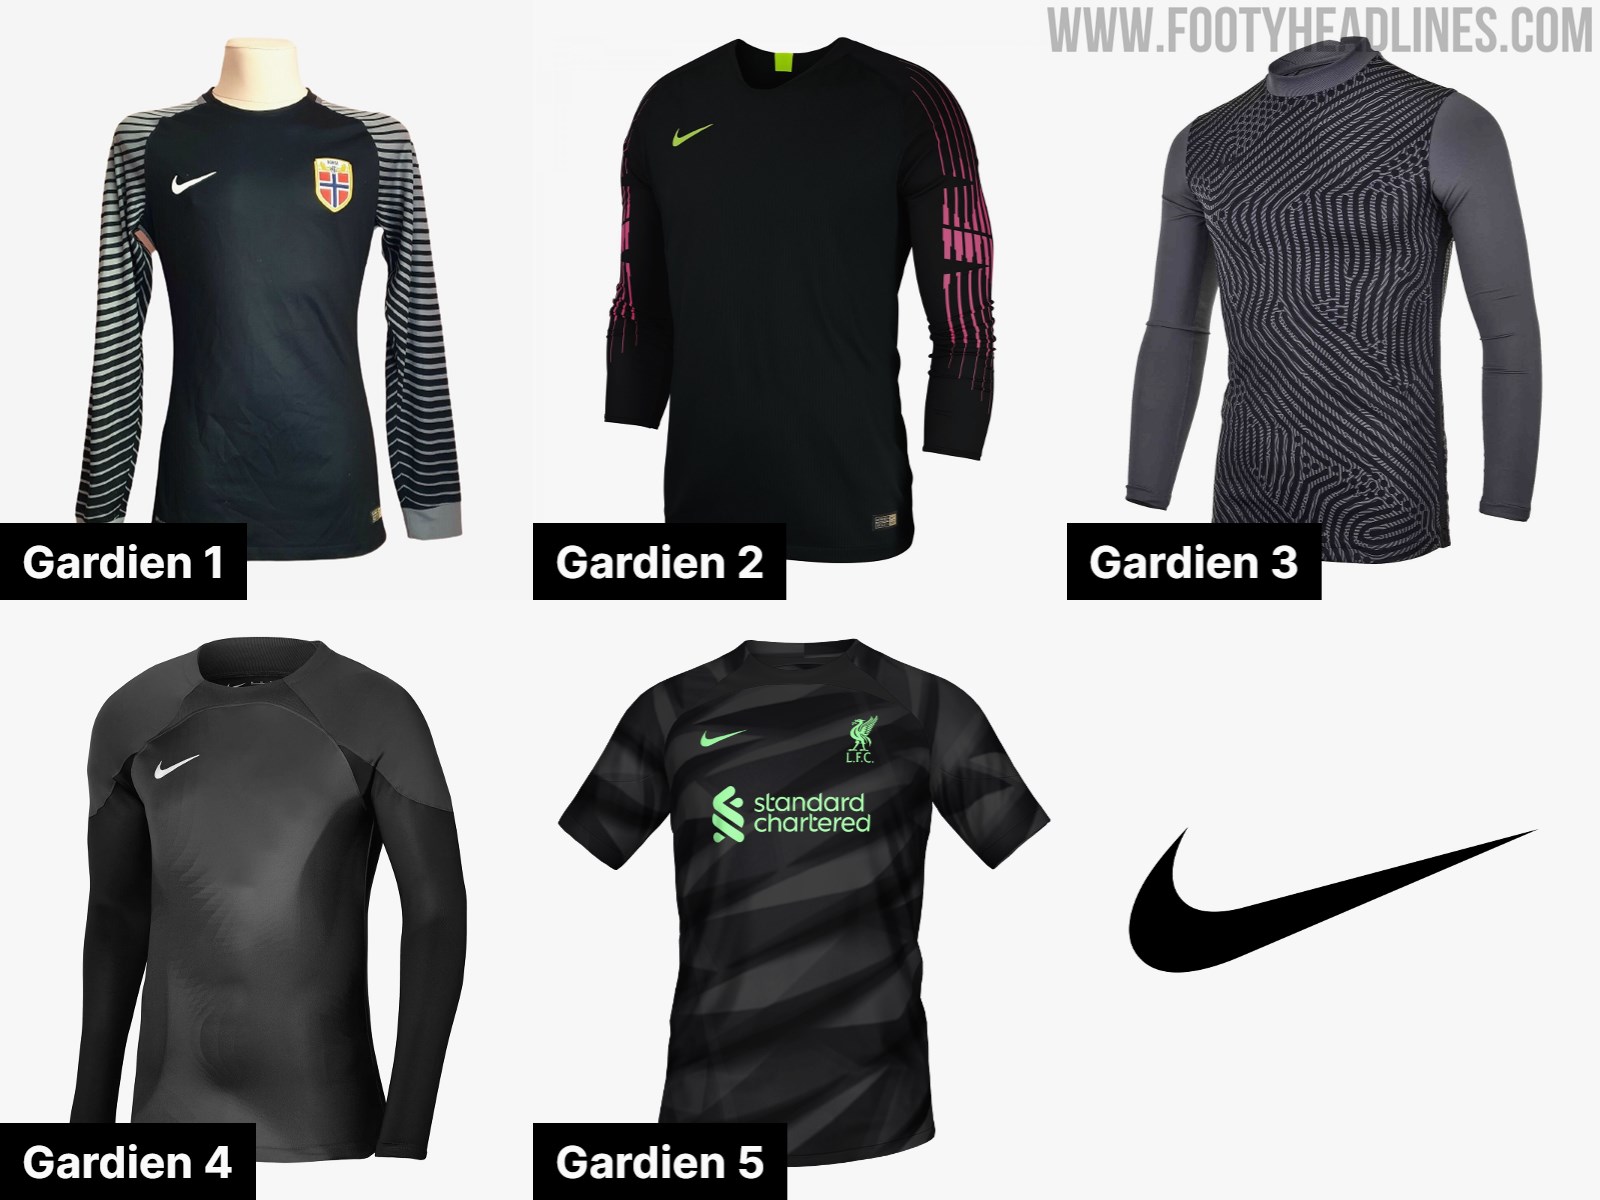 Nike 23-24 Elite Goalkeeper Kit Revealed - Footy Headlines